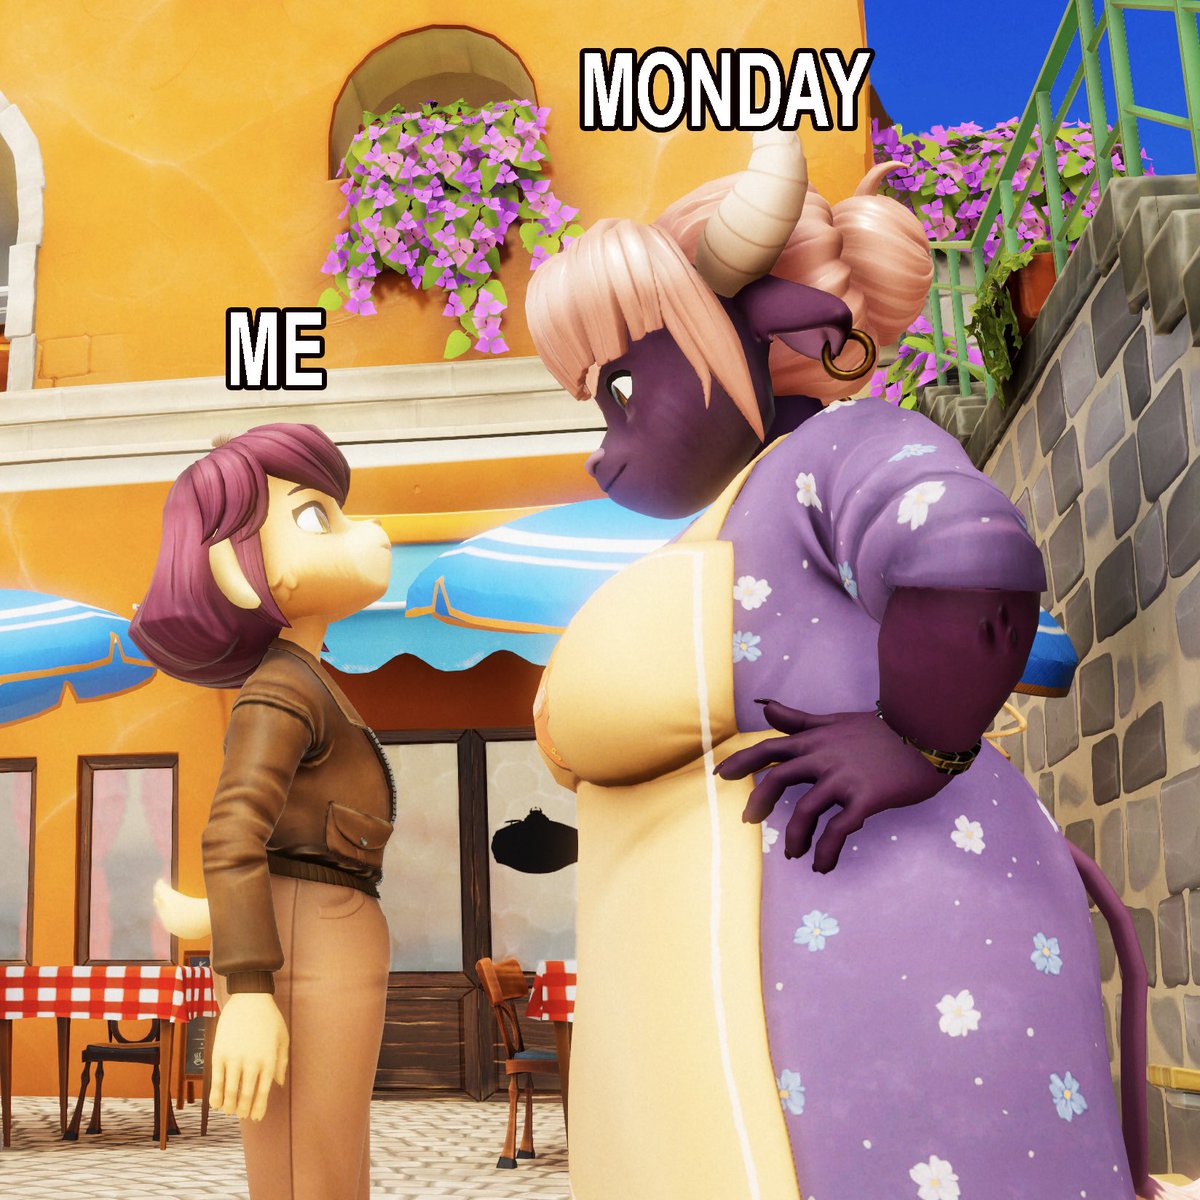 Aaaand… it’s Monday again! 😩
#monday #MondayMood #indiegame